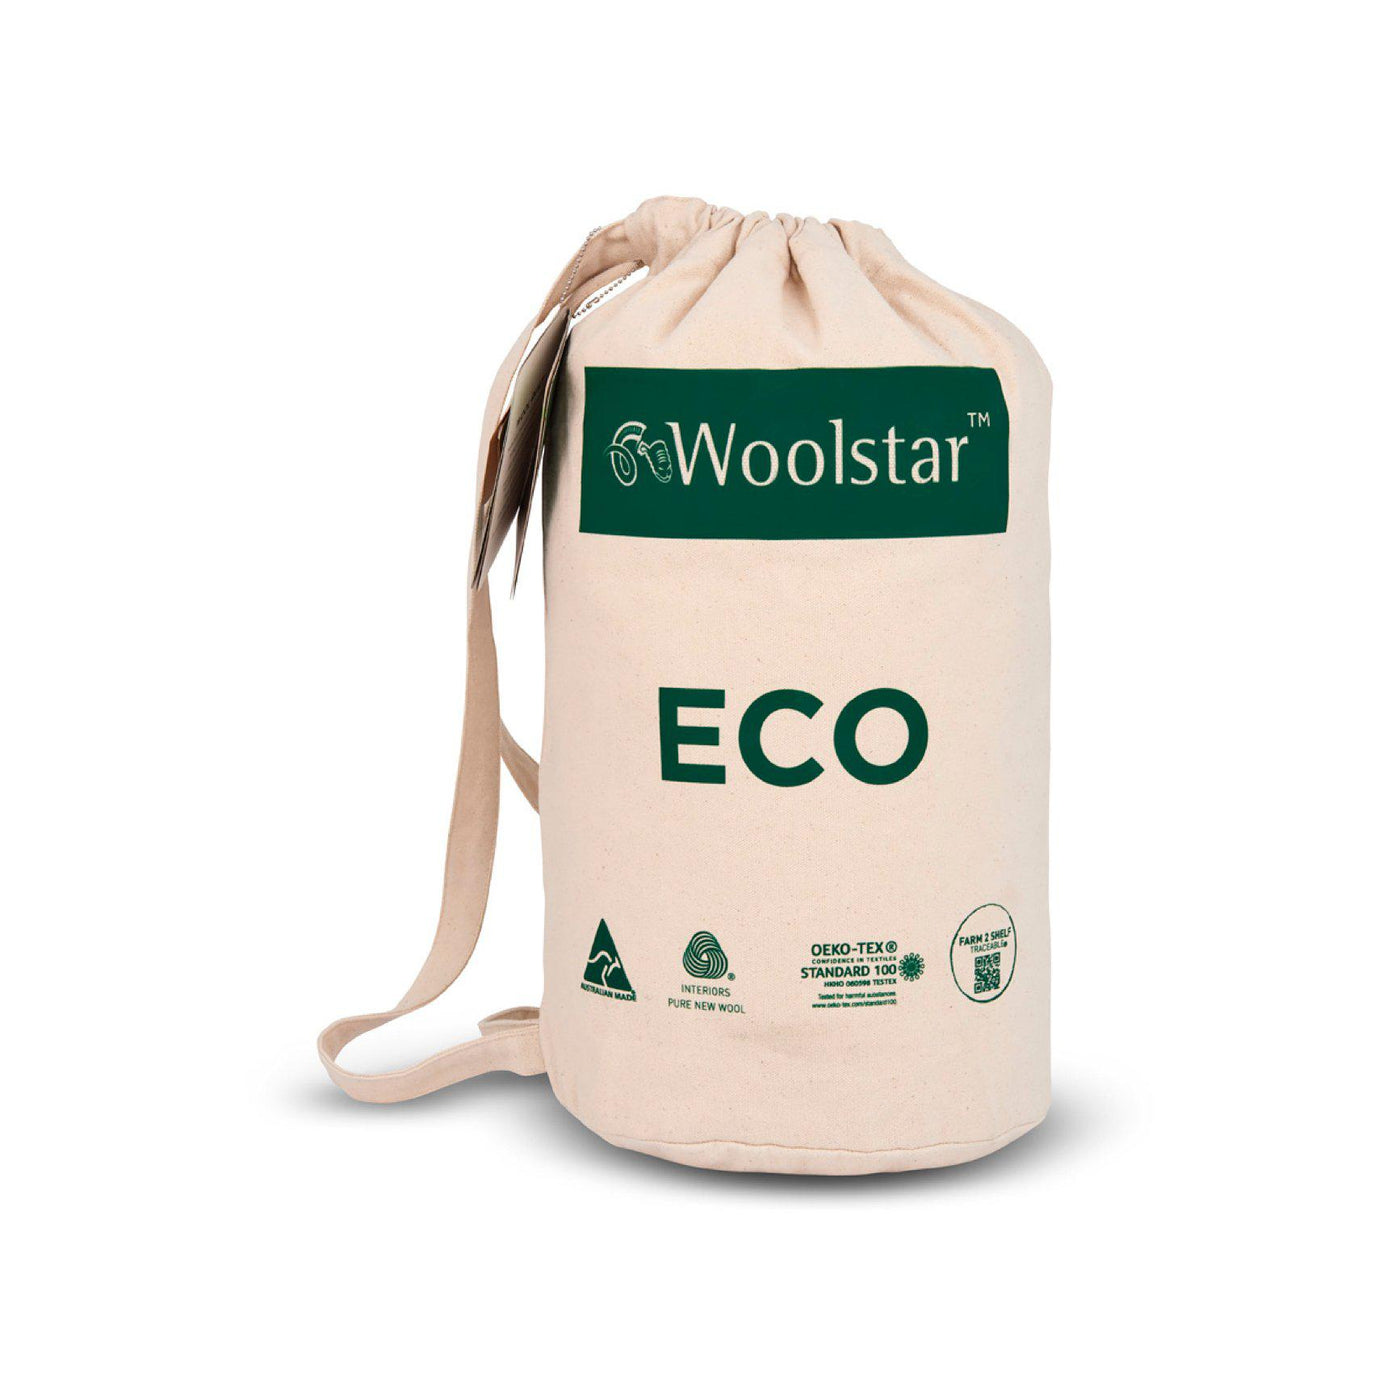 Eco Australian Wool Mattress Protector-Topper-LUXOTIC